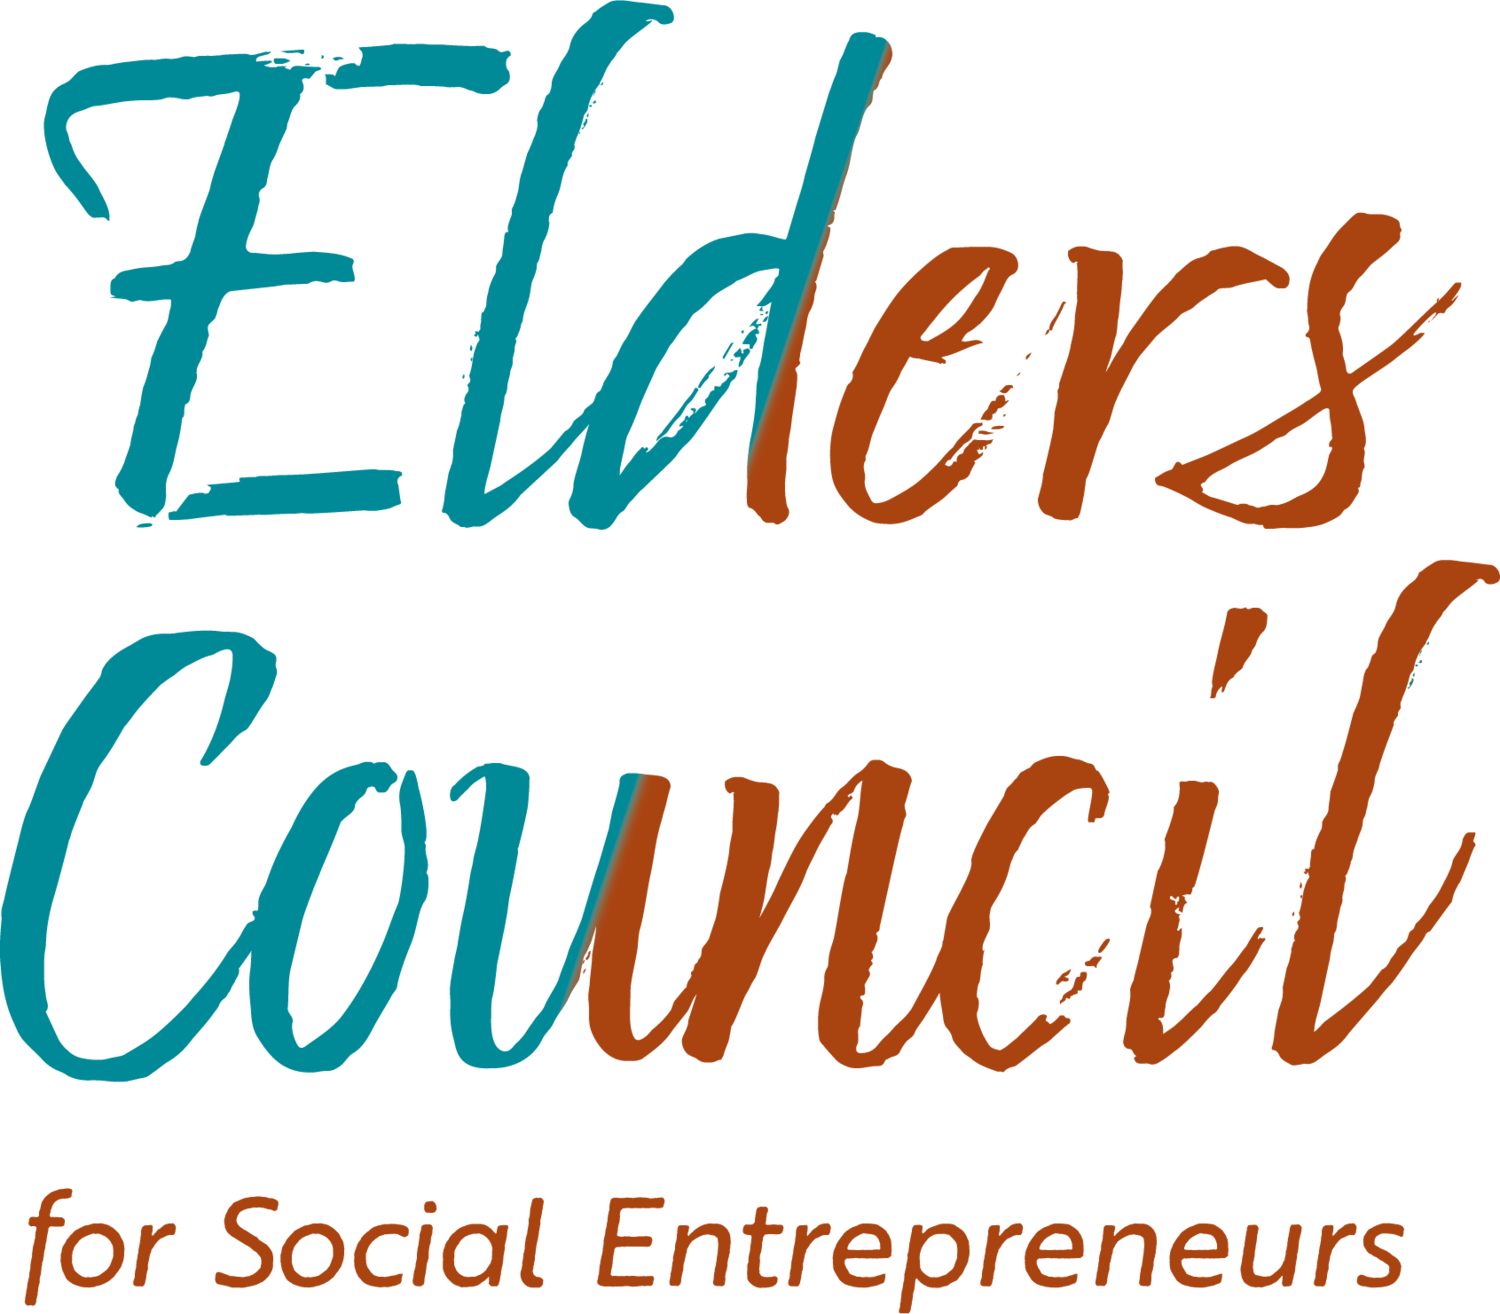 The Elders Council For Social Entrepreneurs